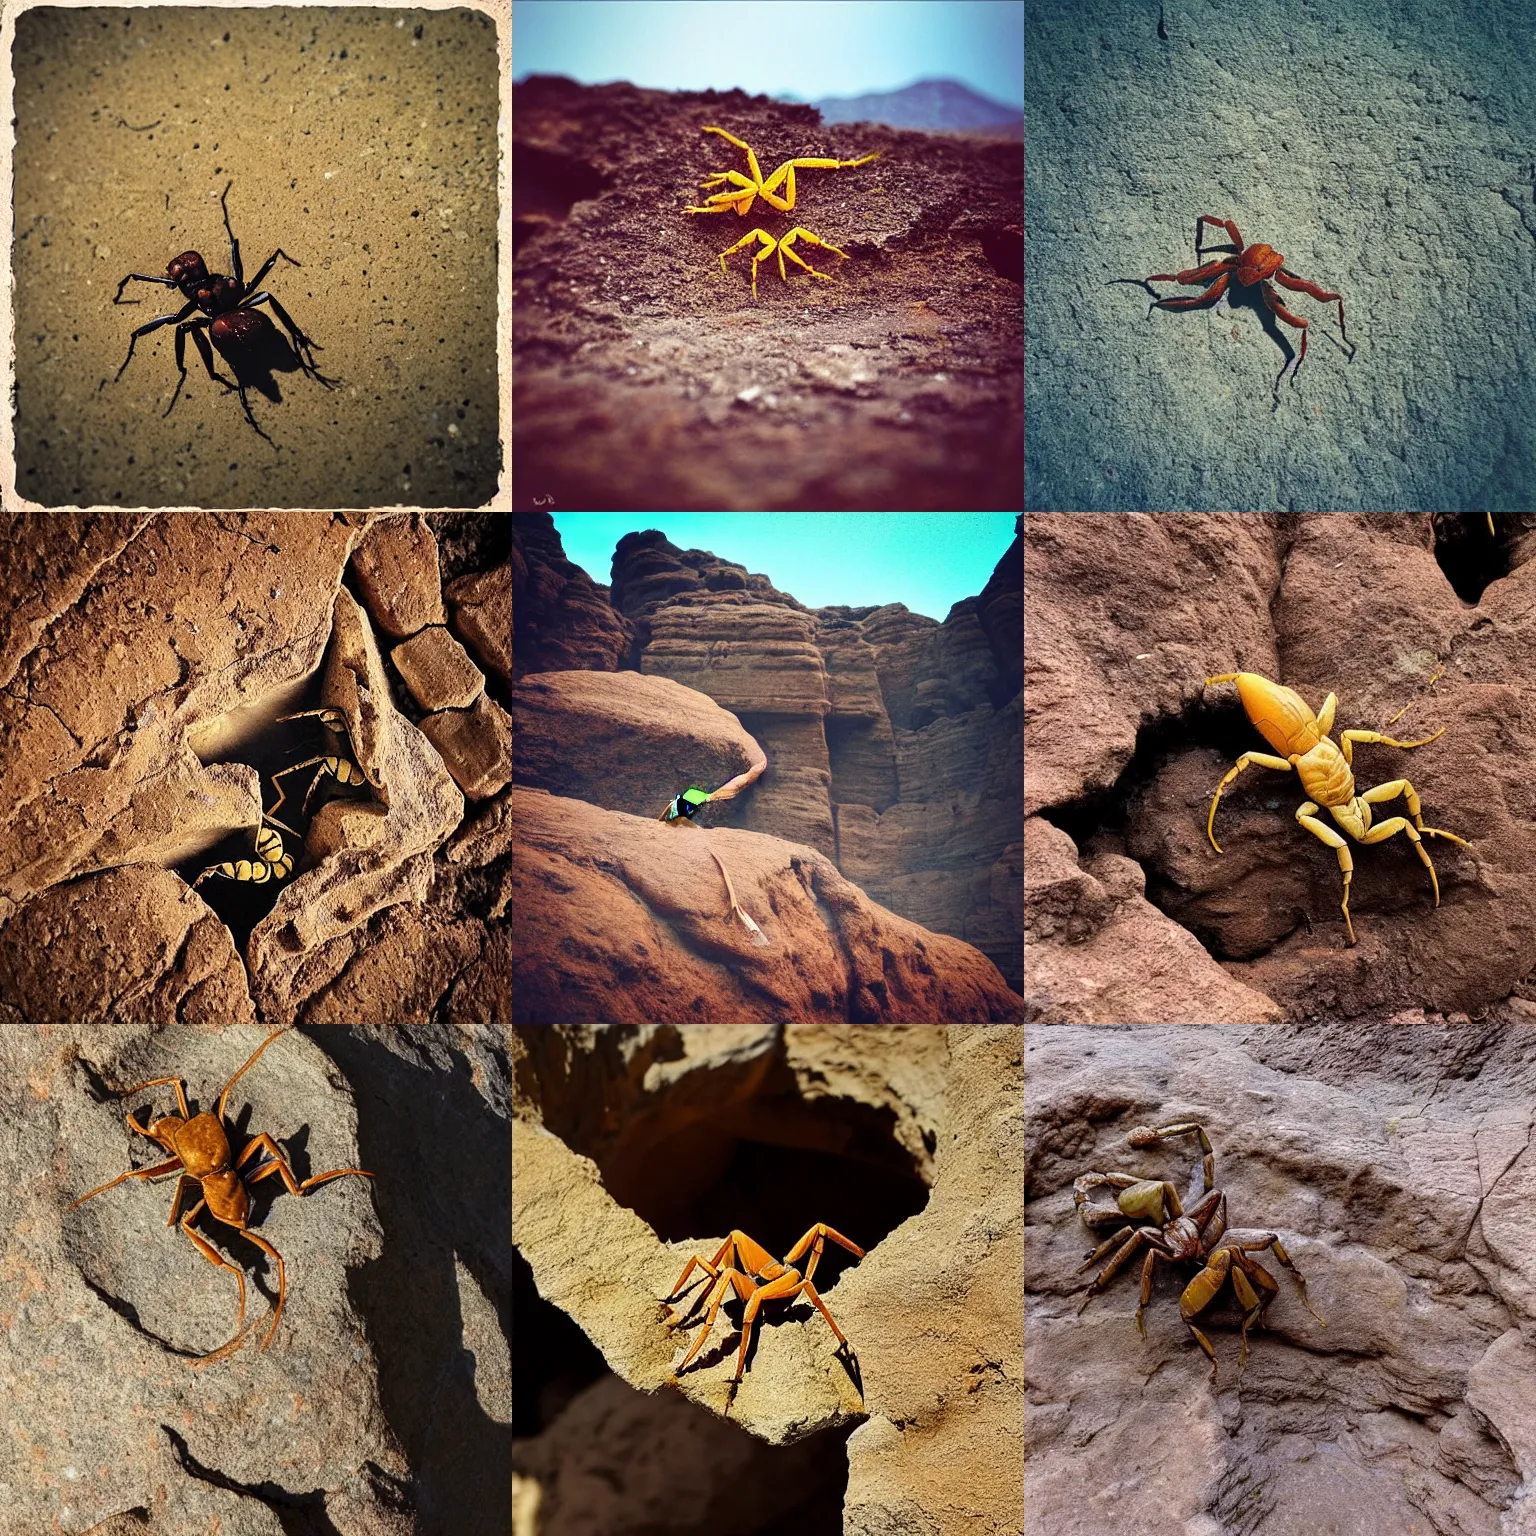 Prompt: “a scorpion in a sandstone pit”